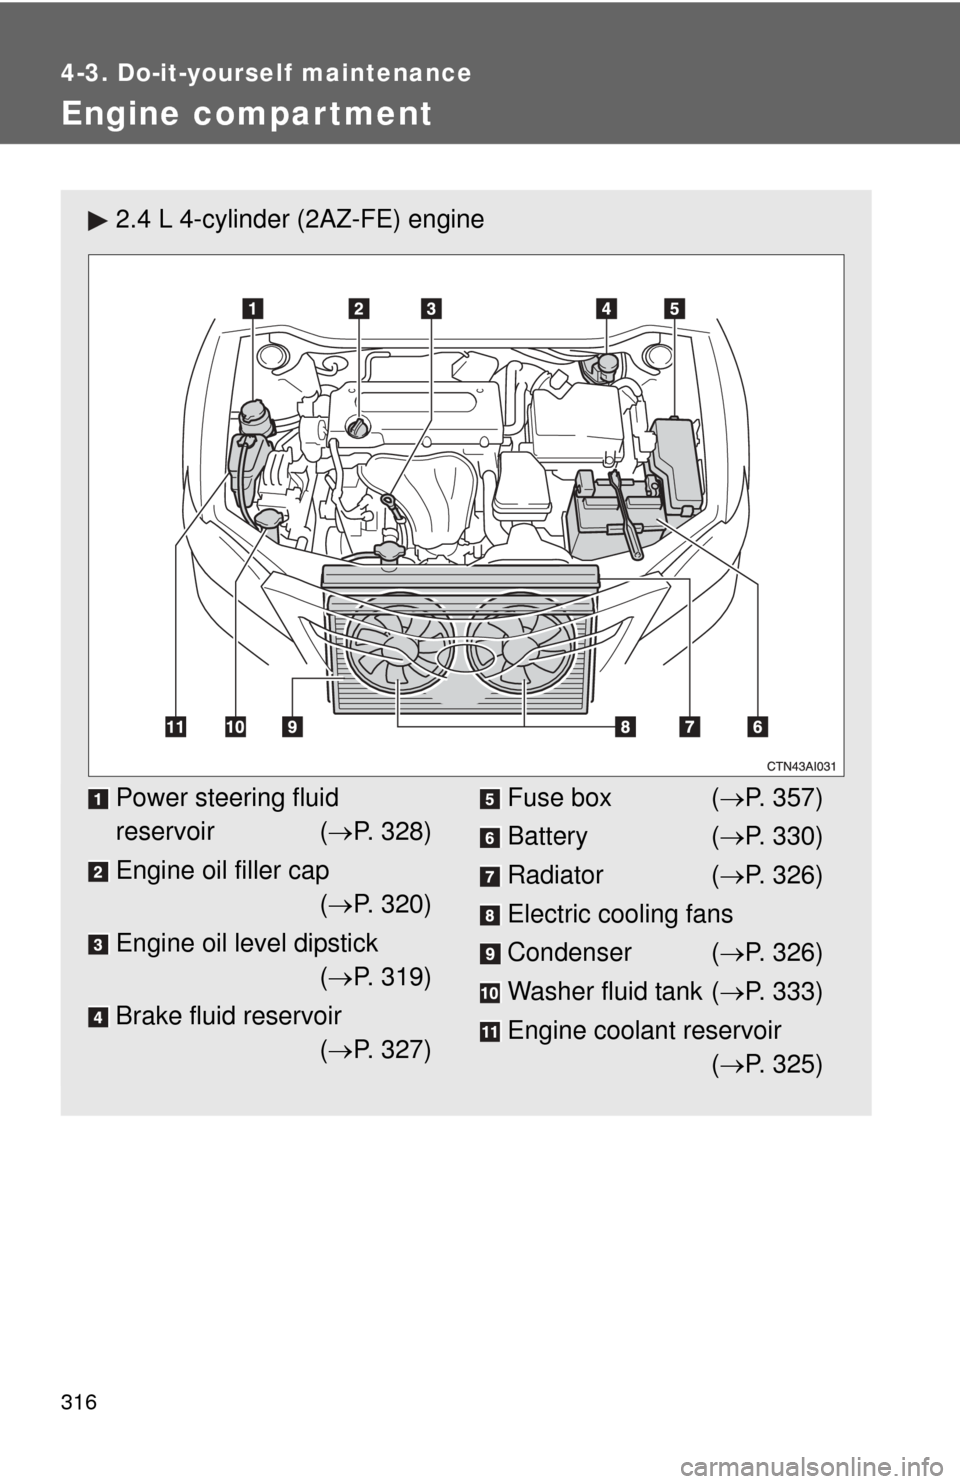 TOYOTA CAMRY 2008 XV40 / 8.G Owners Manual 316
4-3. Do-it-yourself maintenance
Engine compar tment
2.4 L 4-cylinder (2AZ-FE) engine
Power steering fluid 
reservoir (P. 328)
Engine oil filler cap ( P. 320)
Engine oil level dipstick ( P